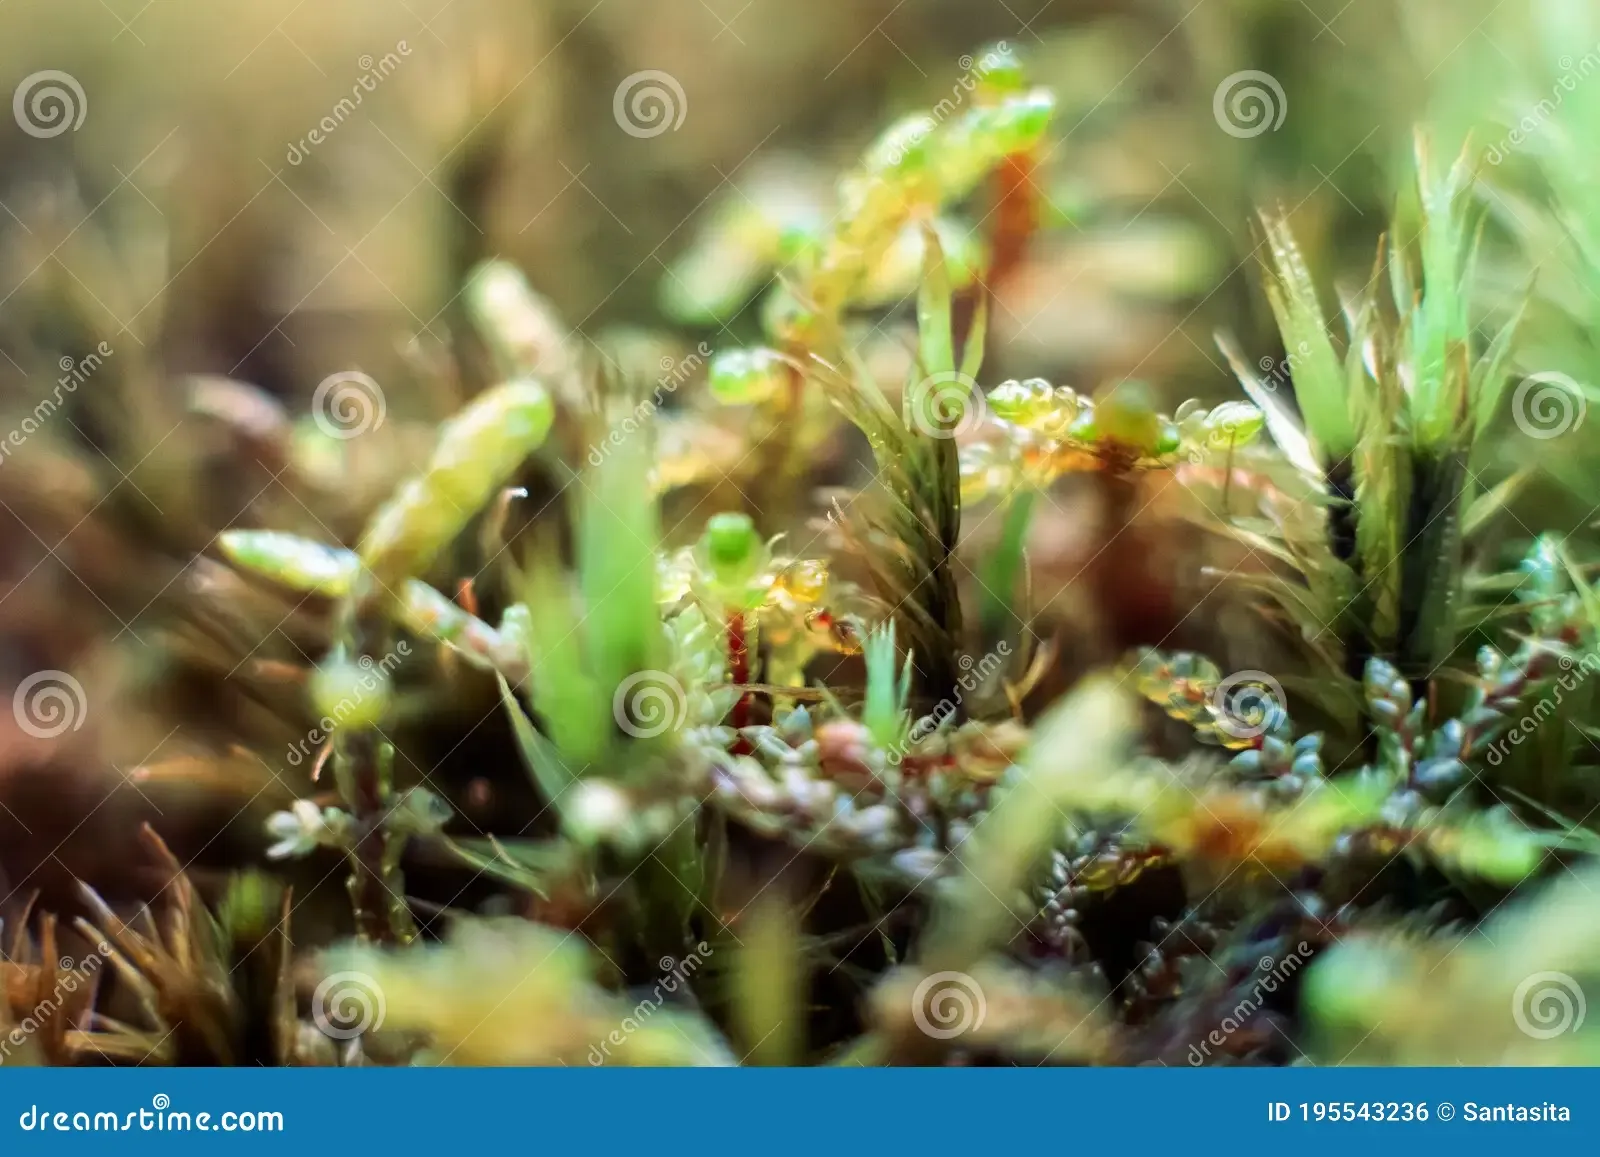 macro-bryum-moss-pohlia-nutans-dew-drops-forest-floor-over-dark-green-background-mossy-plants-mosses-195543236.jpg